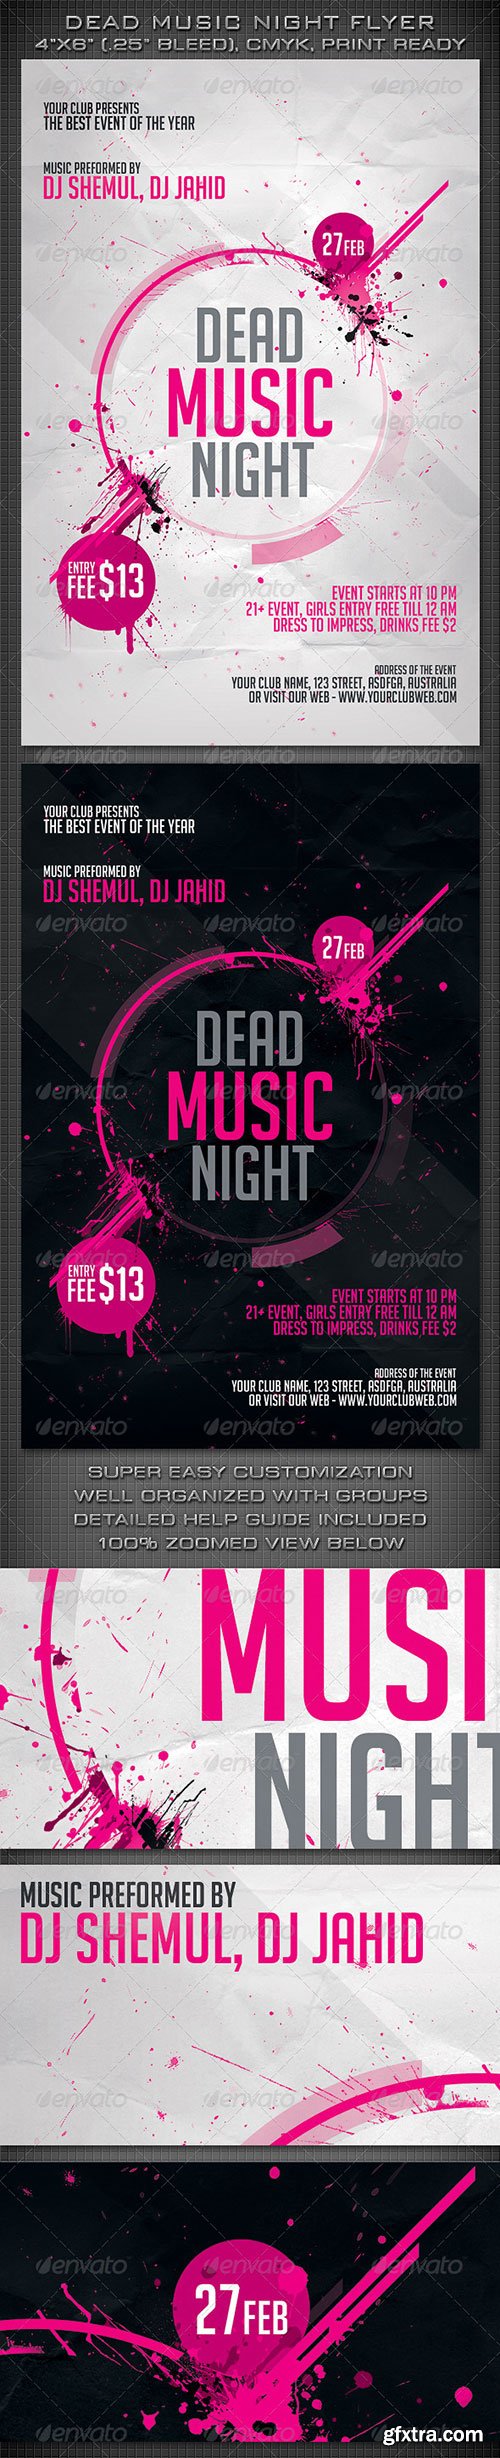 GraphicRiver - Dead Music Night Flyer